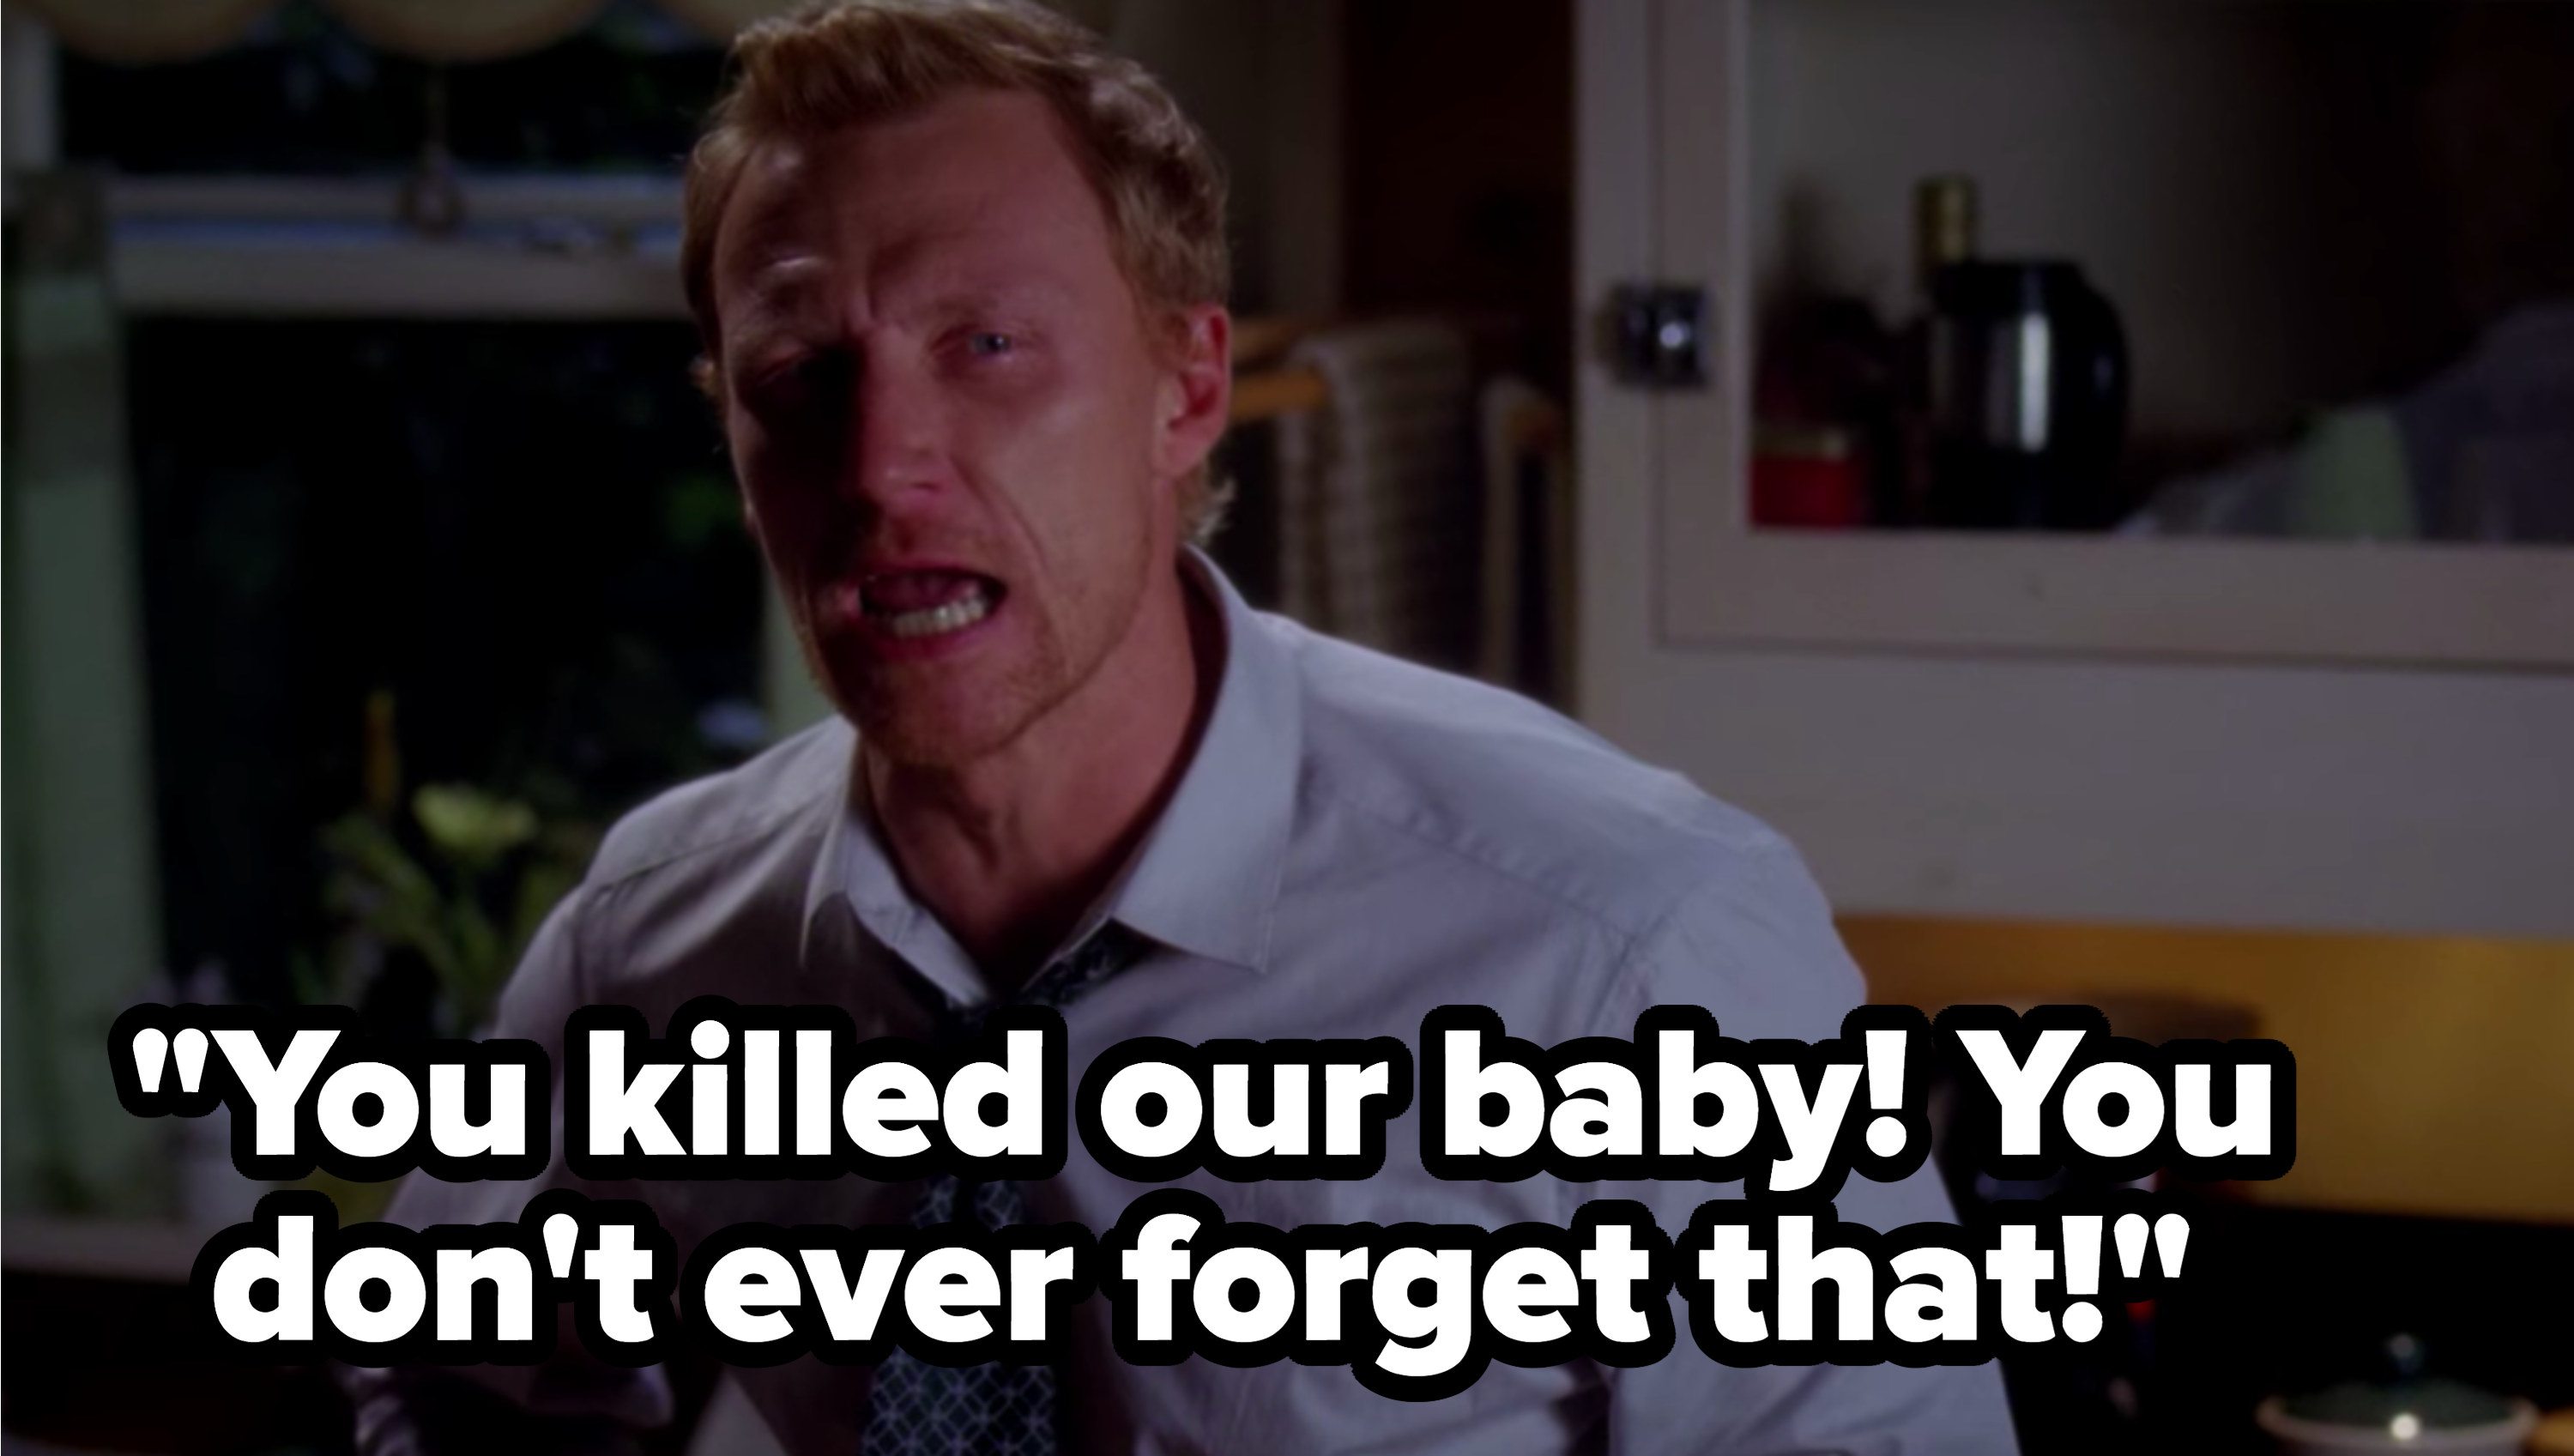 Owen yells at Cristina and says she killed their baby